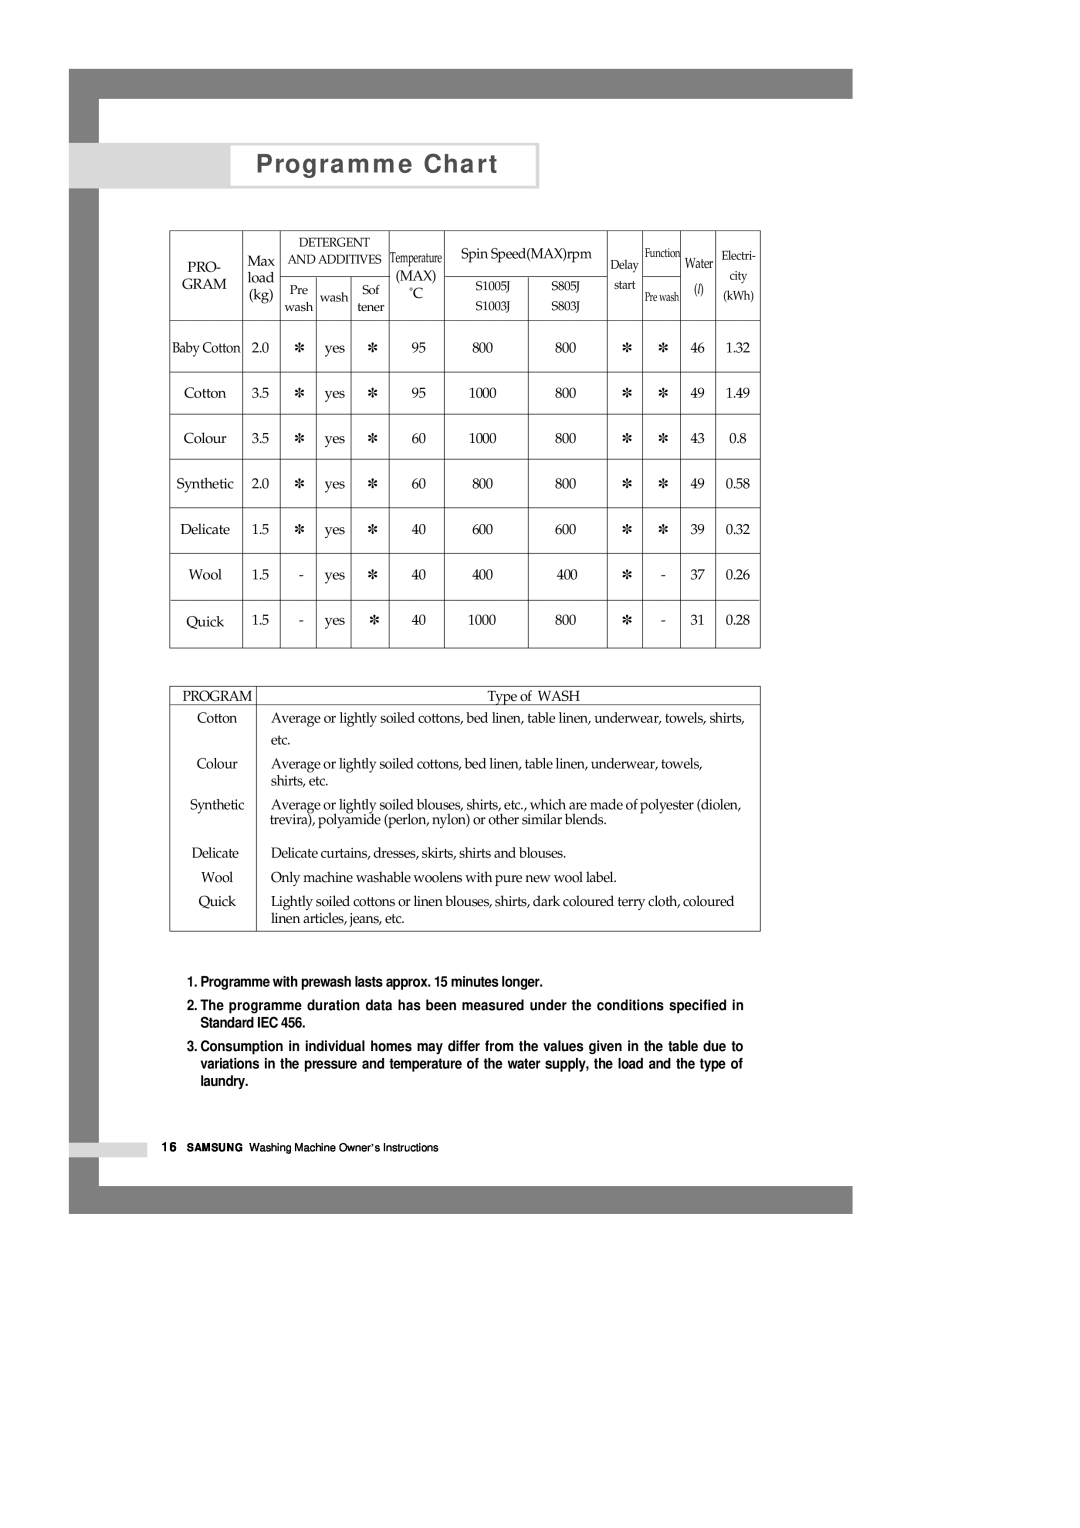 Samsung S803J, S1003J, S1005J, S805J manual Programme Chart 